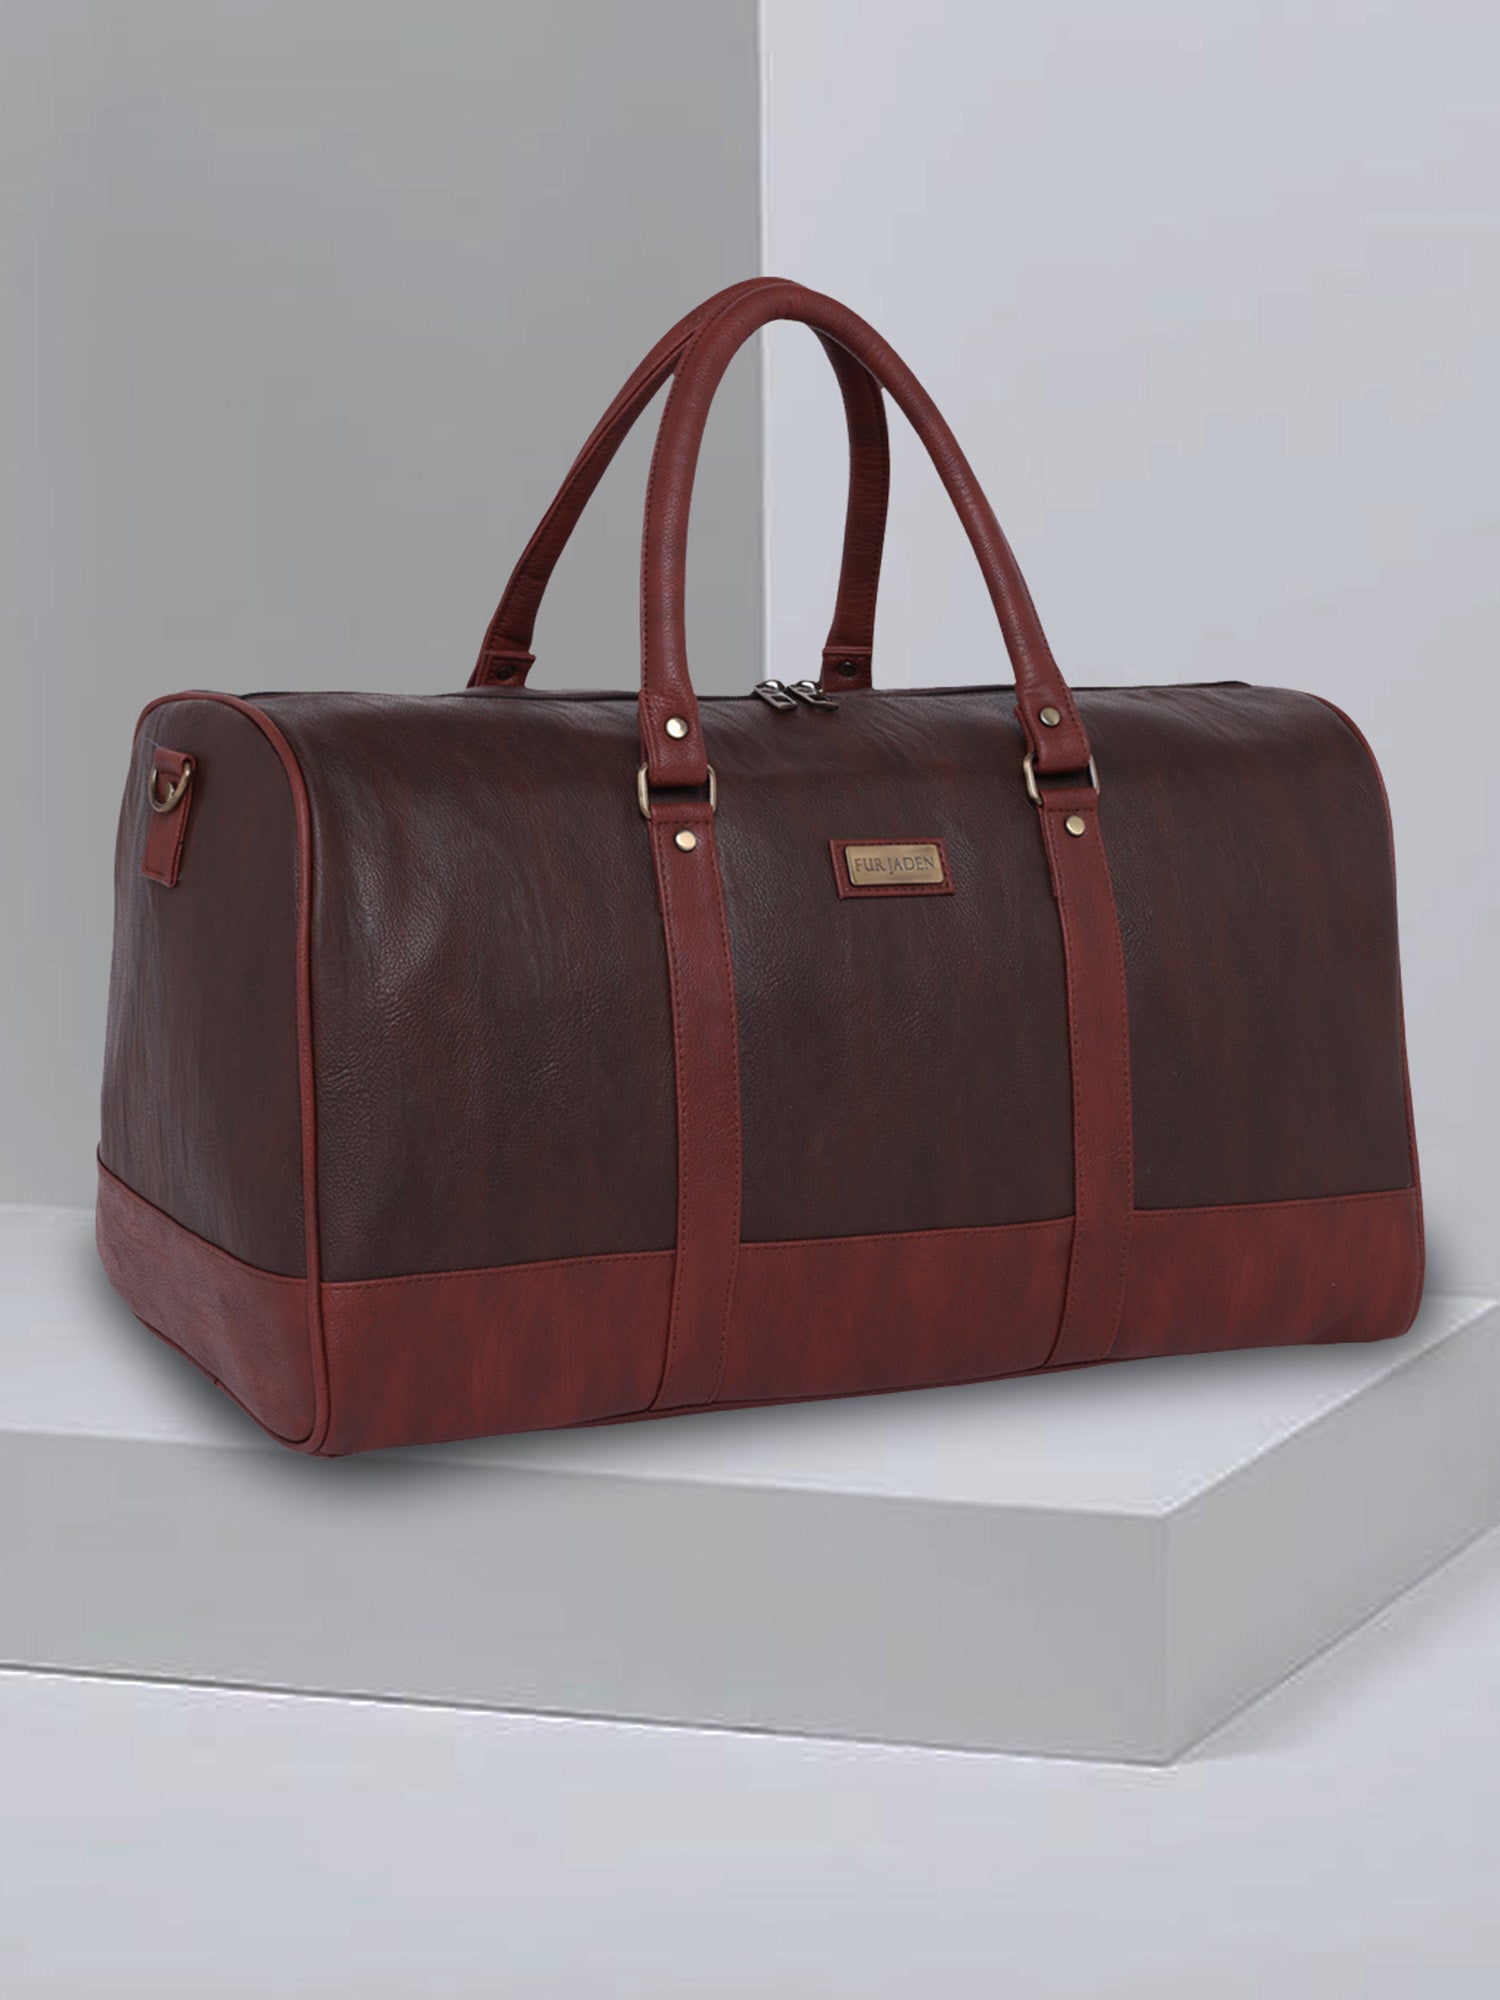 Mocha Brown Vegan Leather Travel Duffle Bag With External Shoe Pocket